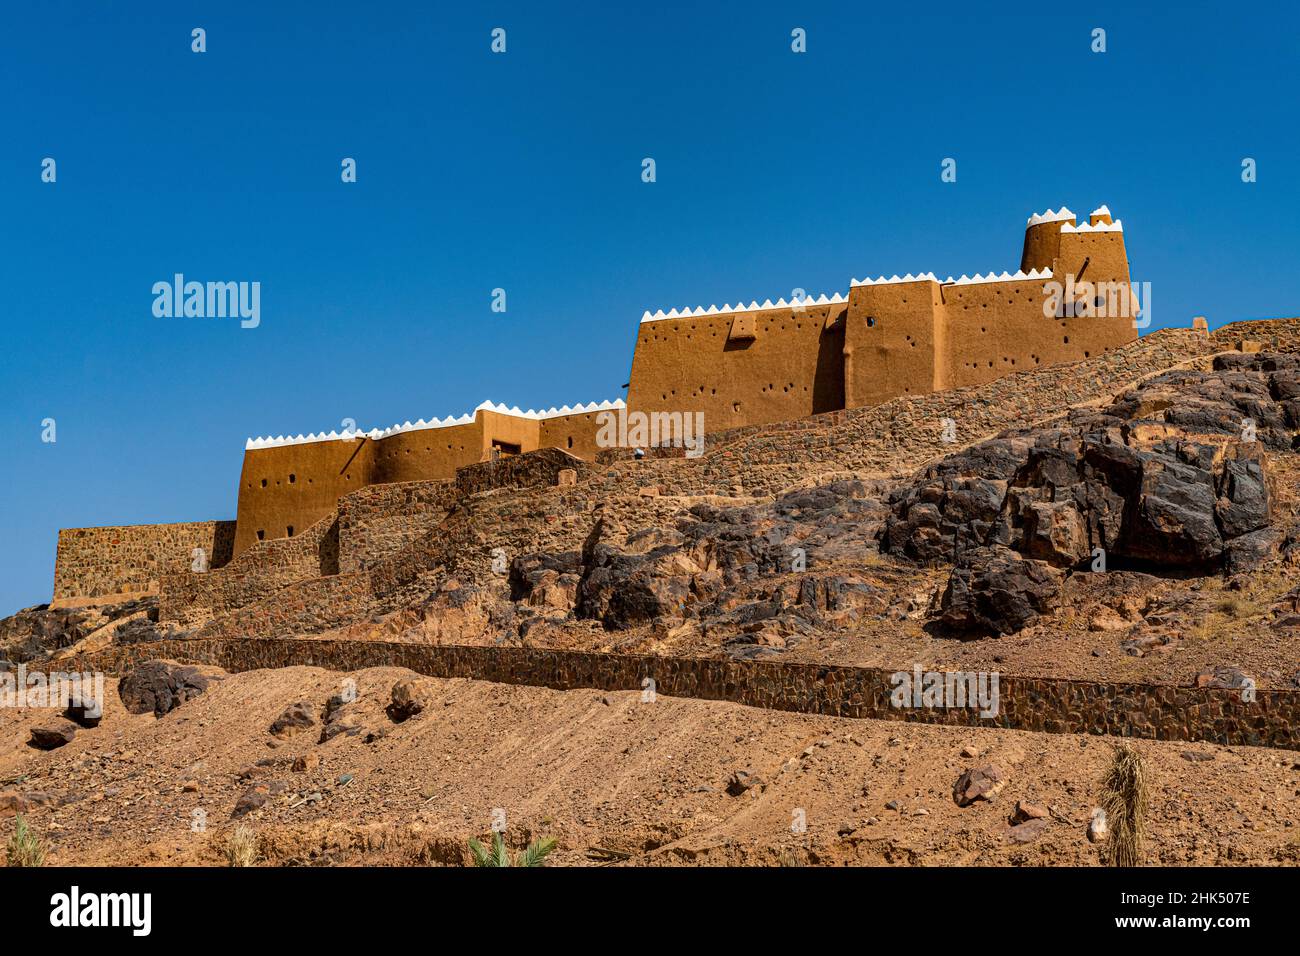 Aarif Fort, Hail, Kingdom of Saudi Arabia, Middle East Stock Photo